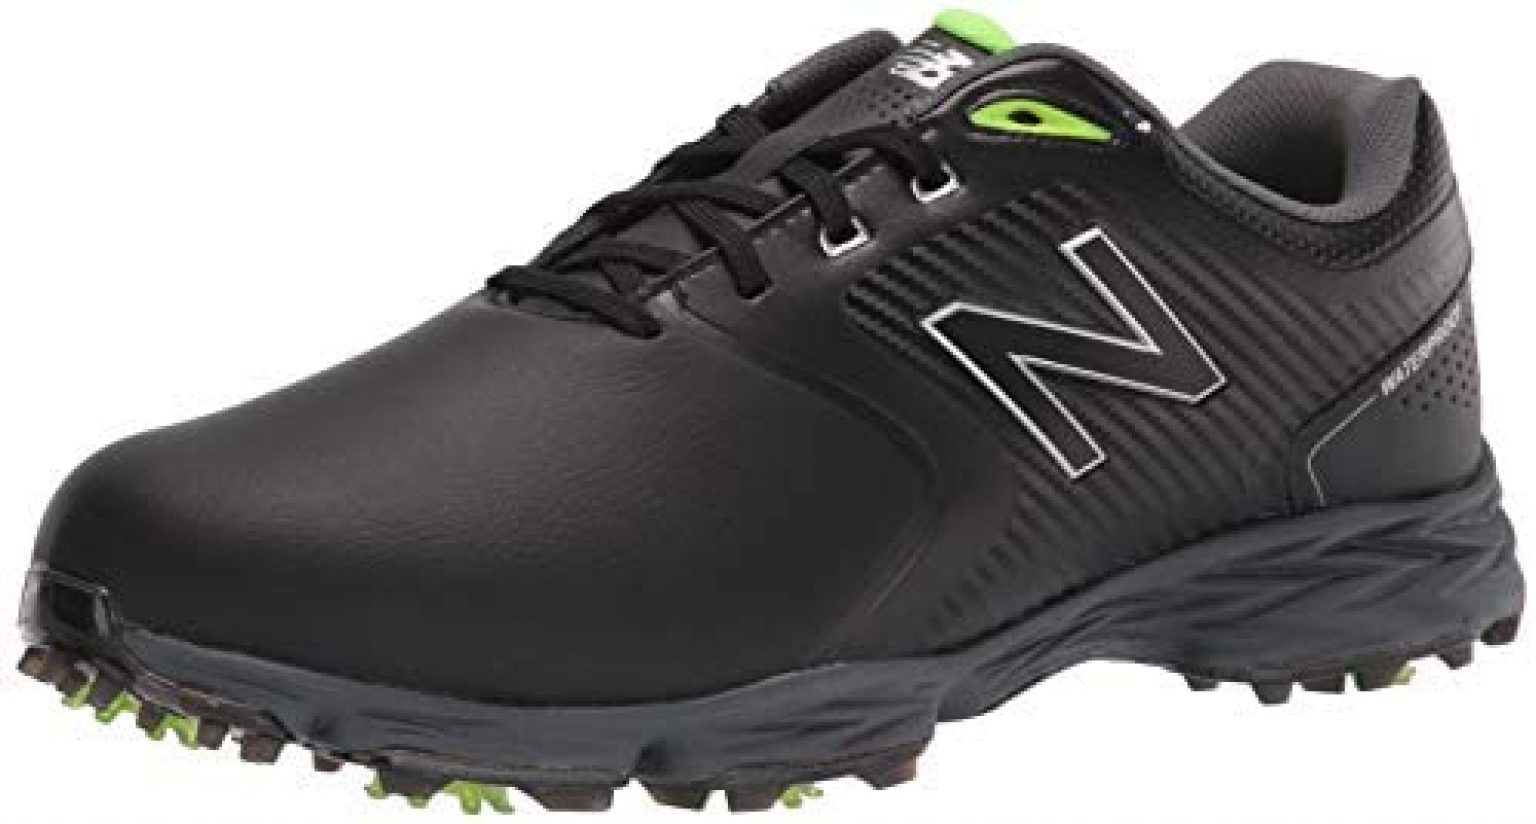 New Balance Men's Striker V2 Golf Shoe - Golf Products Review